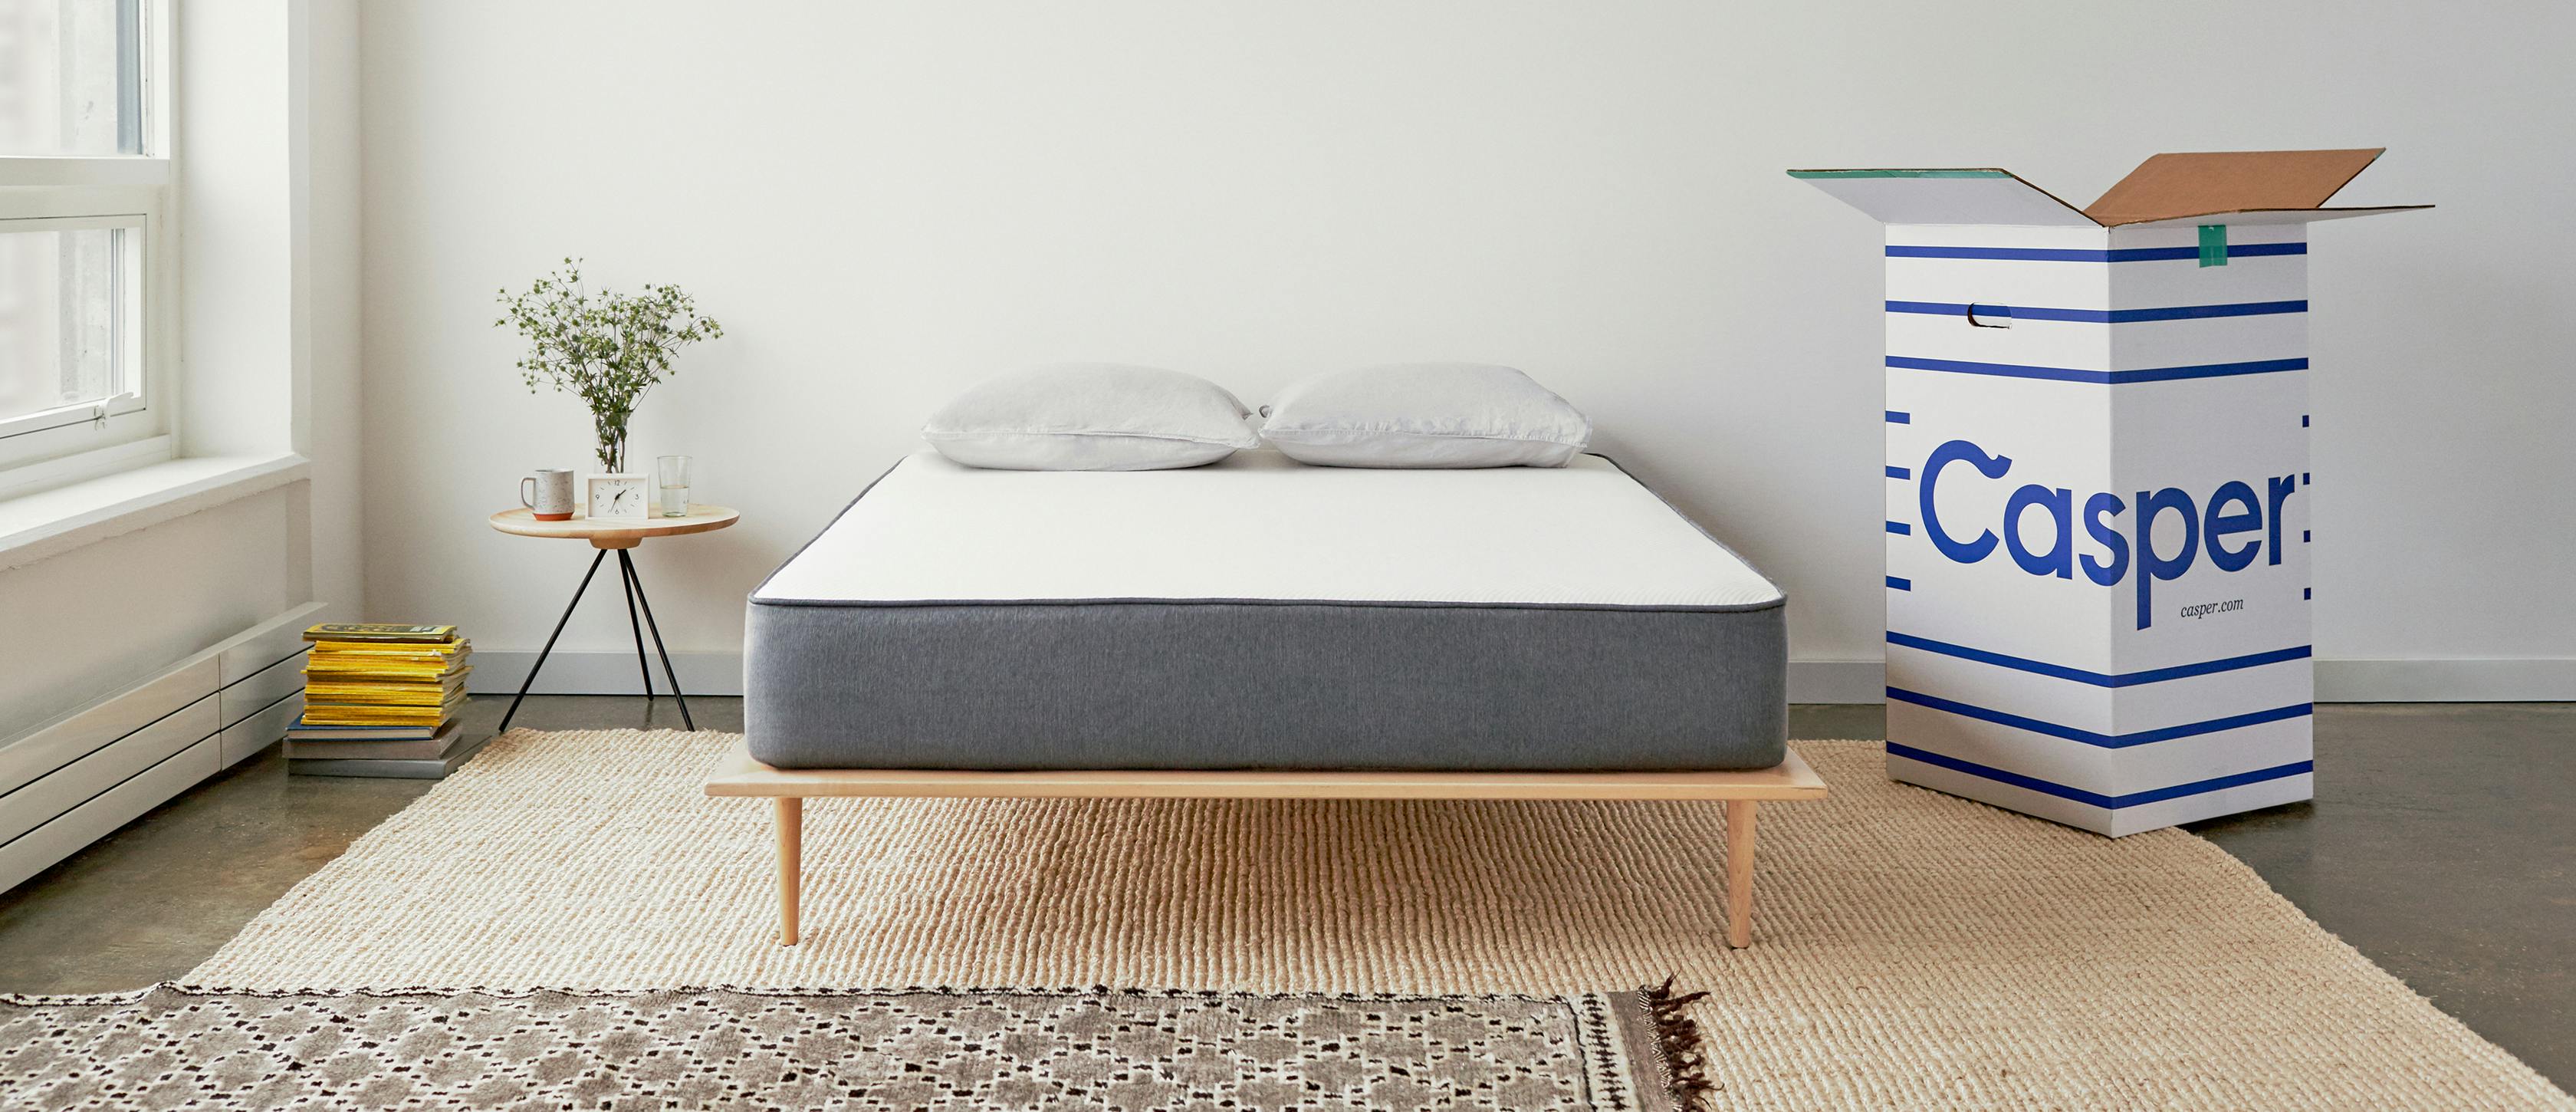 casper best price on twin mattress